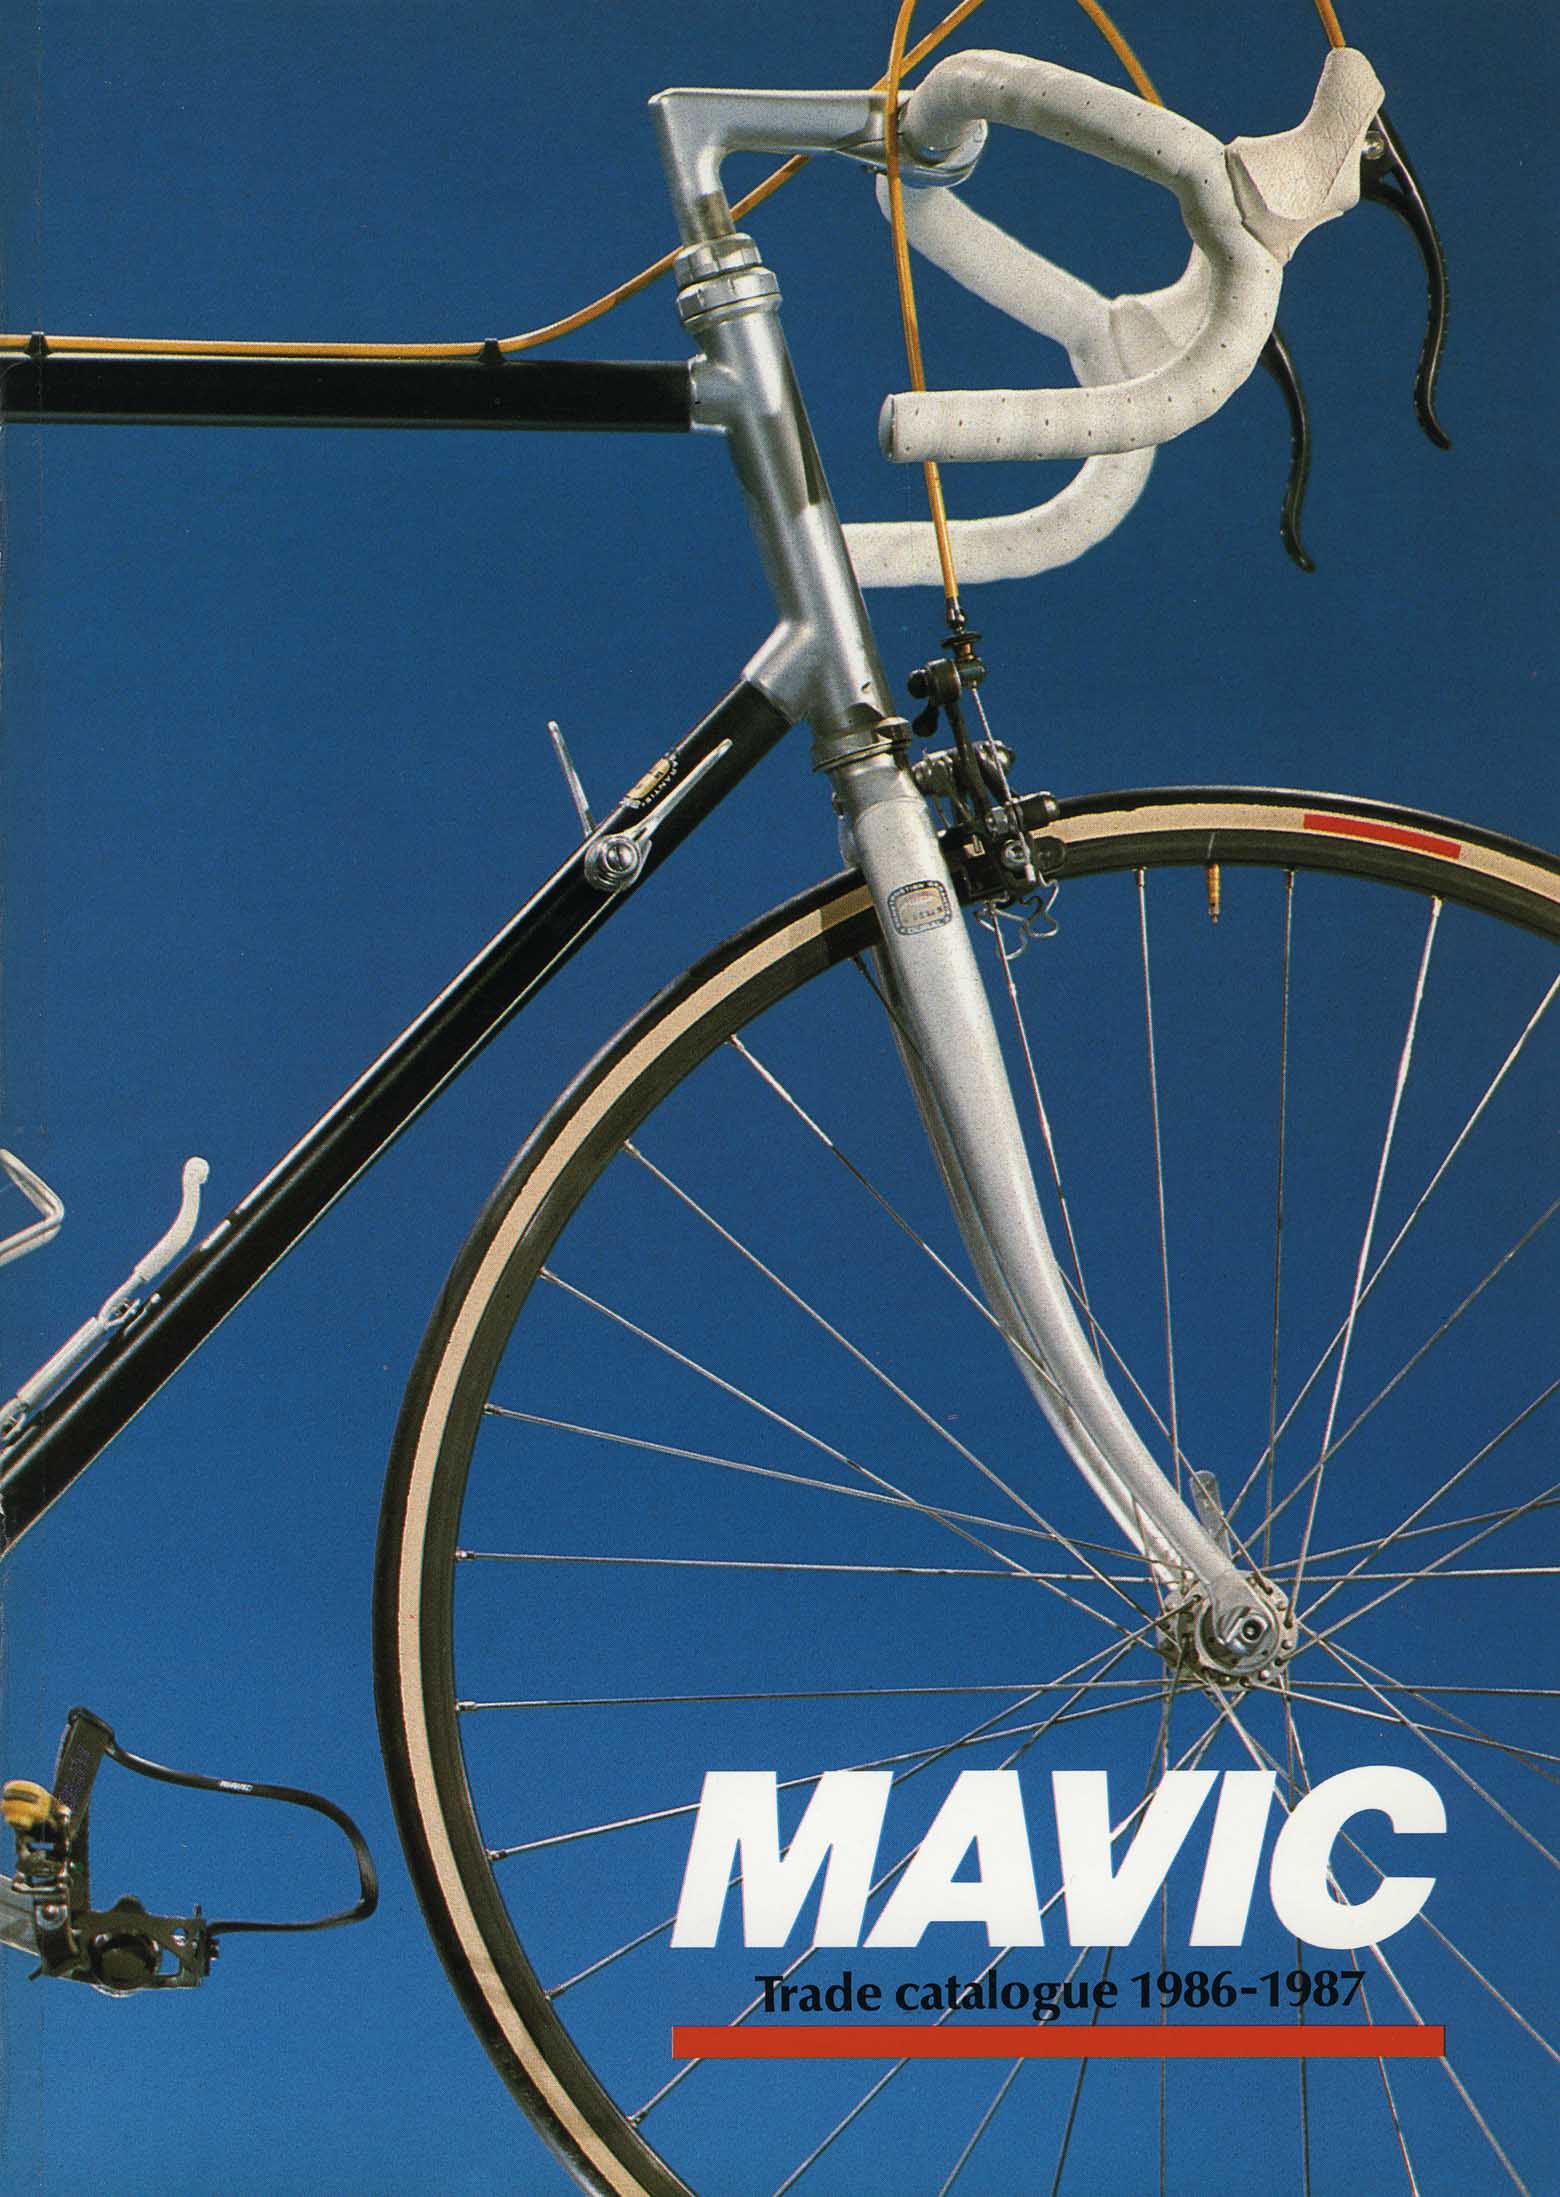 MAVIC - Trade catalogue 1986-1987 front cover main image